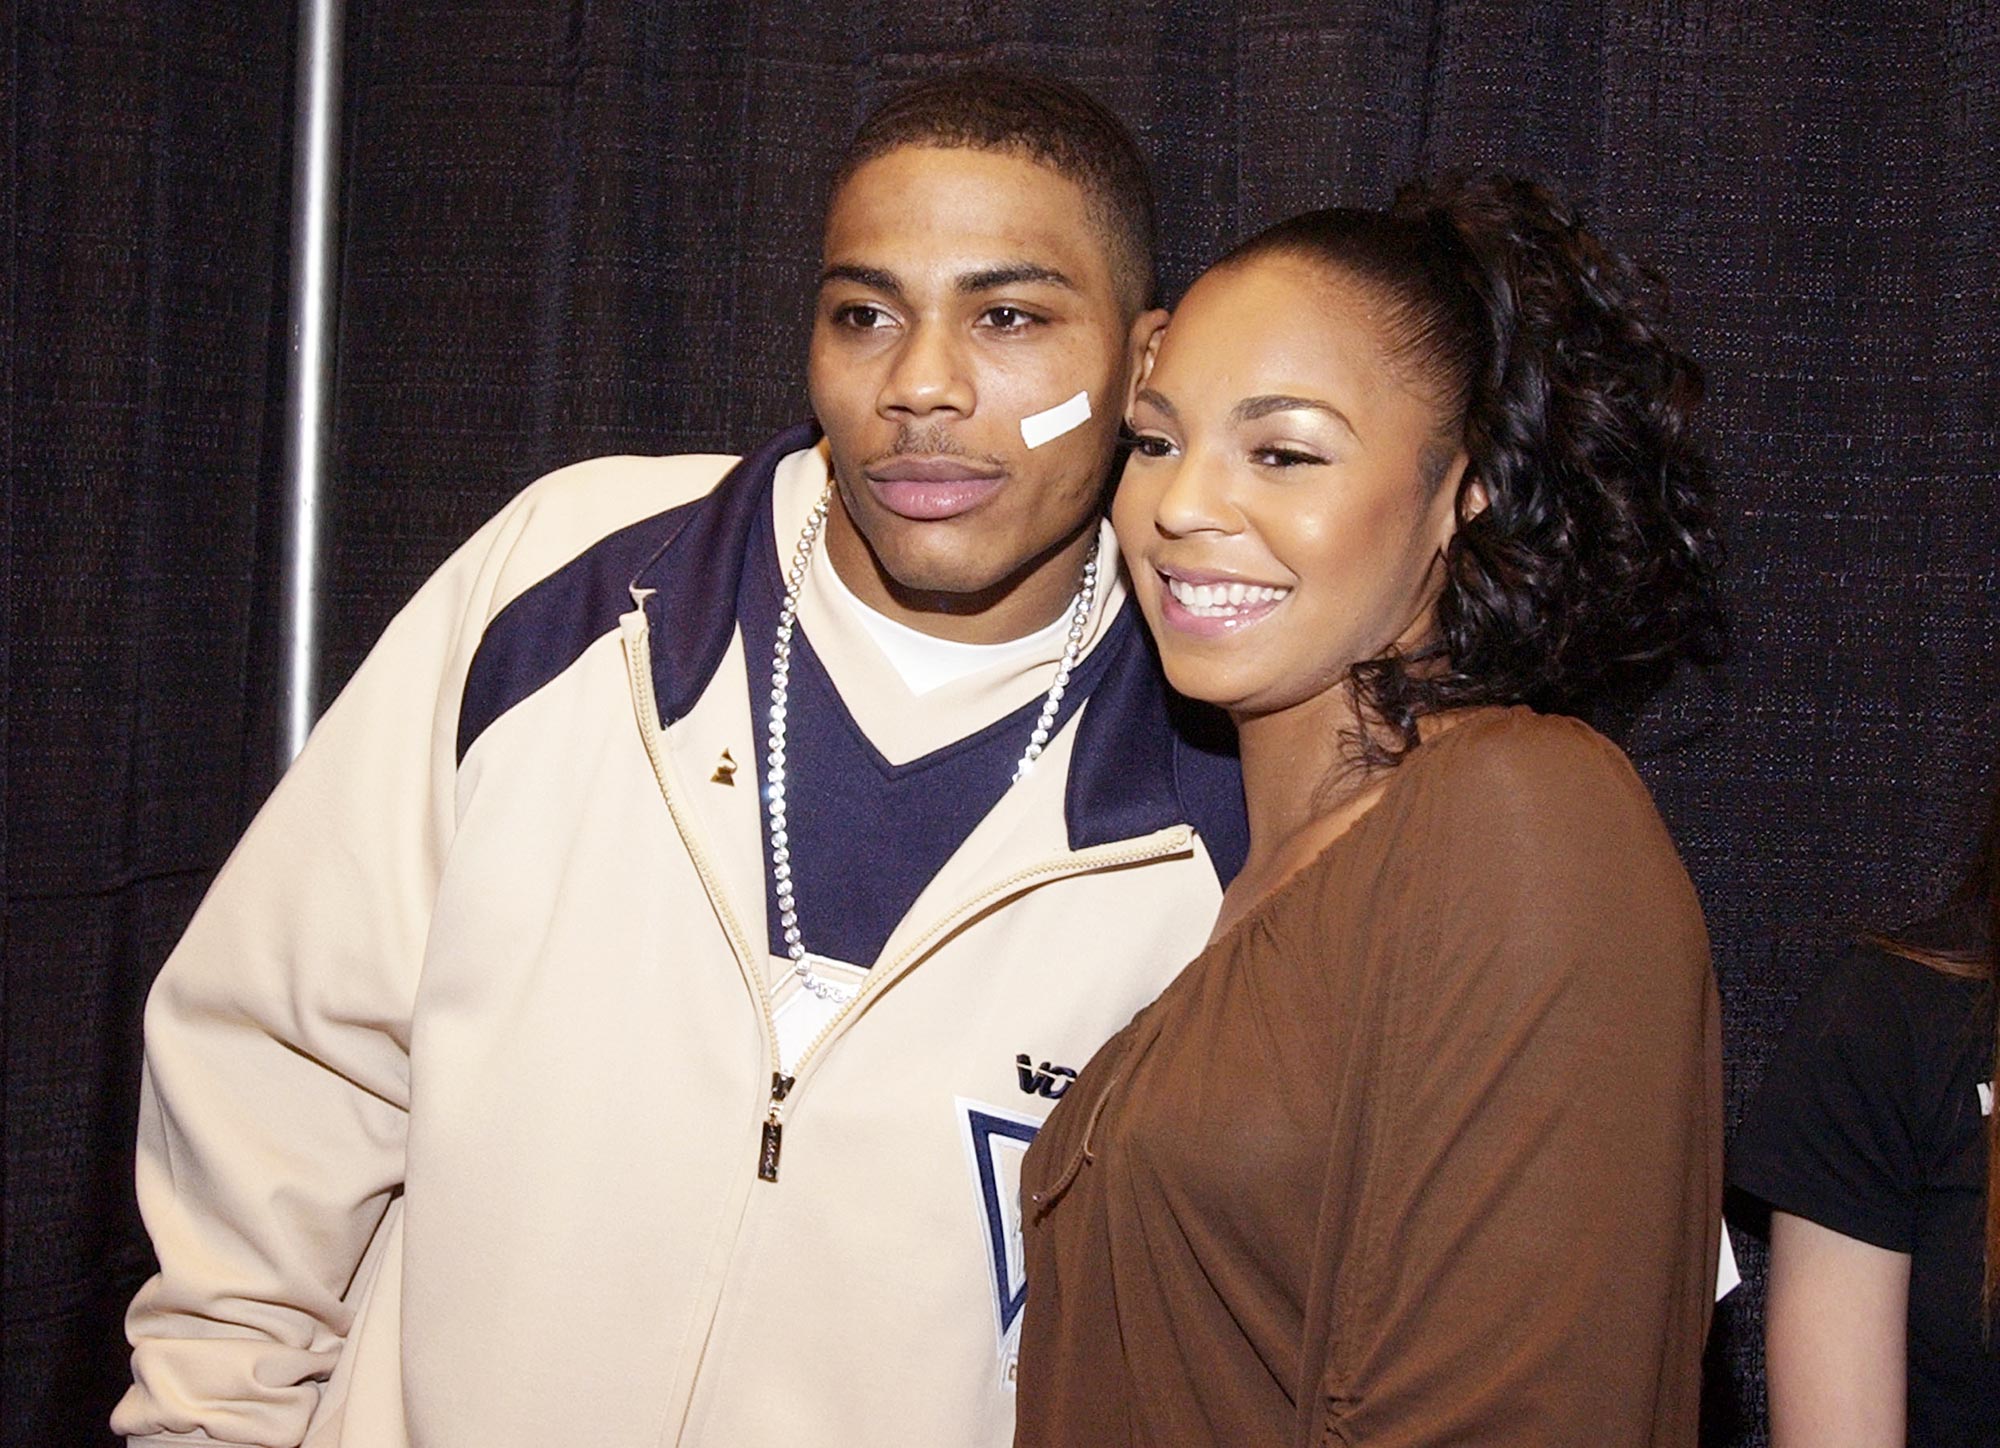 Pregnant Ashanti and Boyfriend Nelly's Relationship Timeline